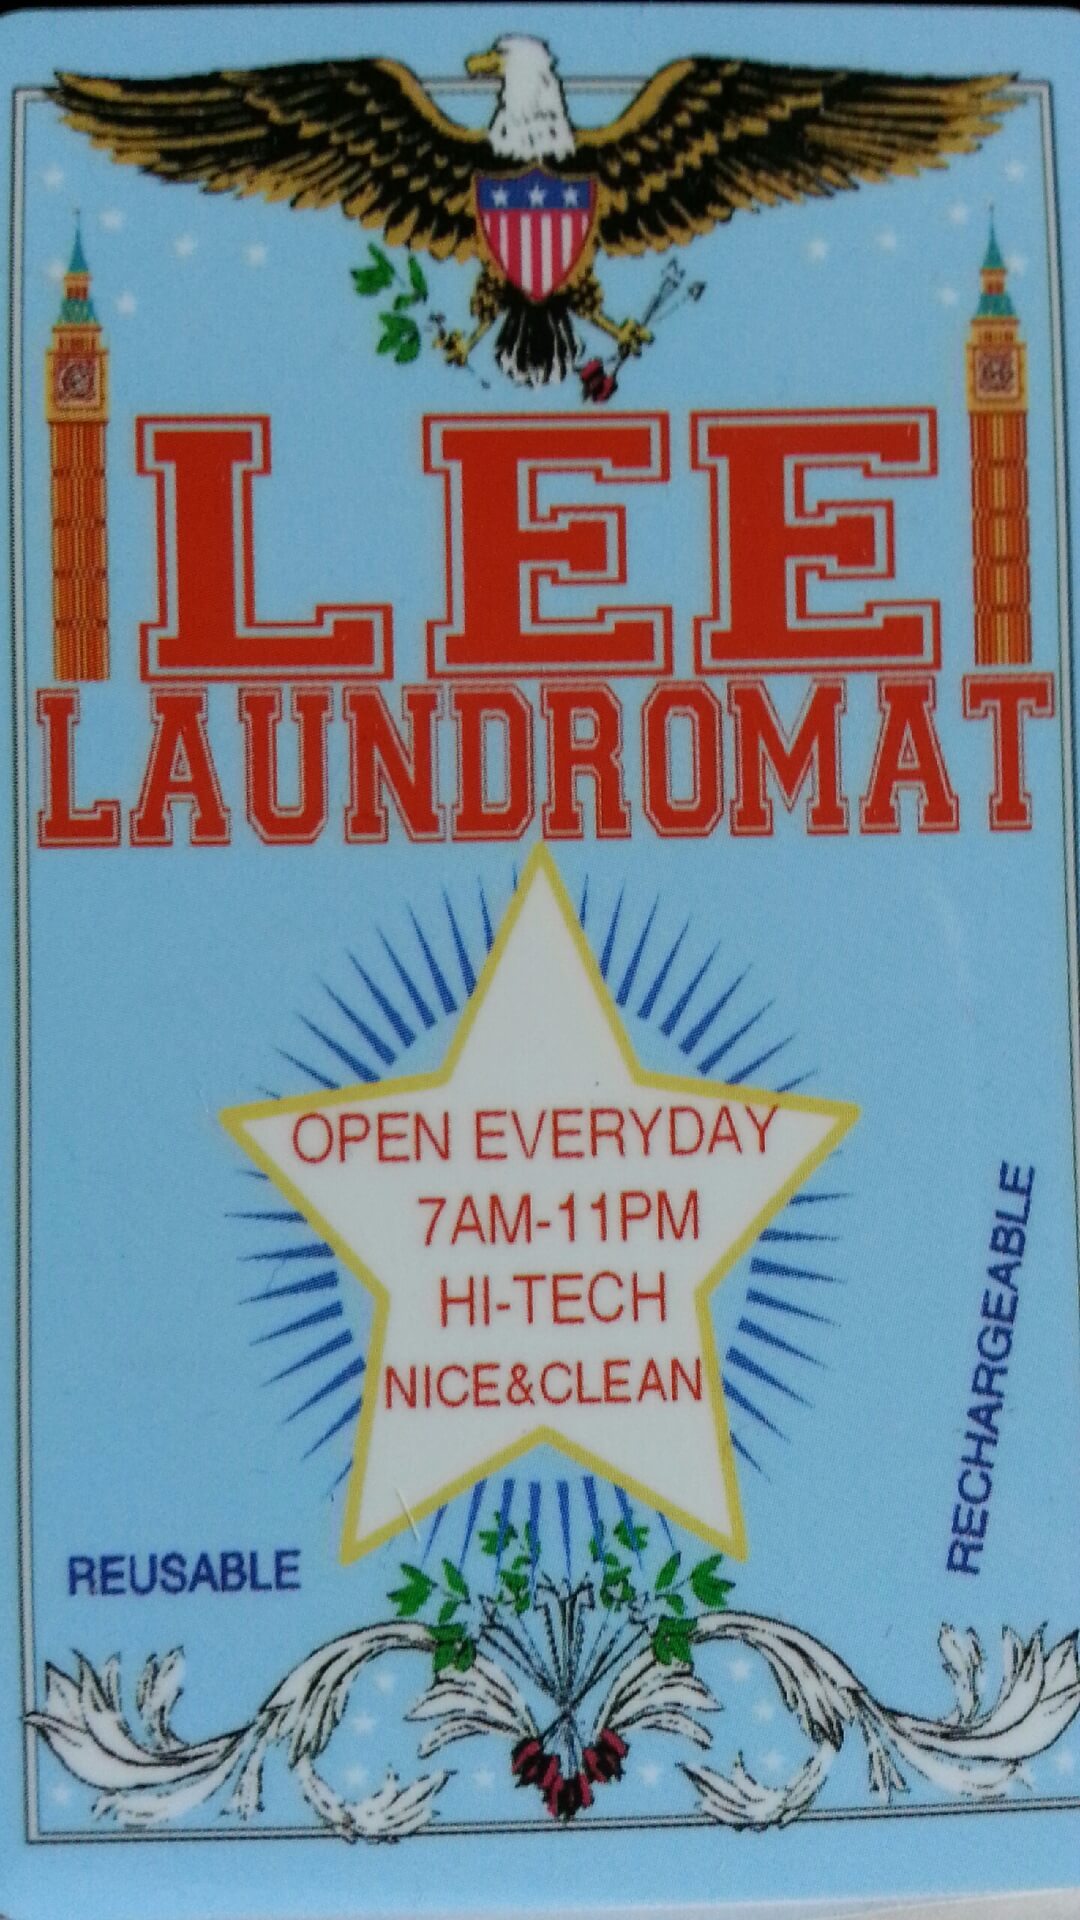 Lee Laundromat